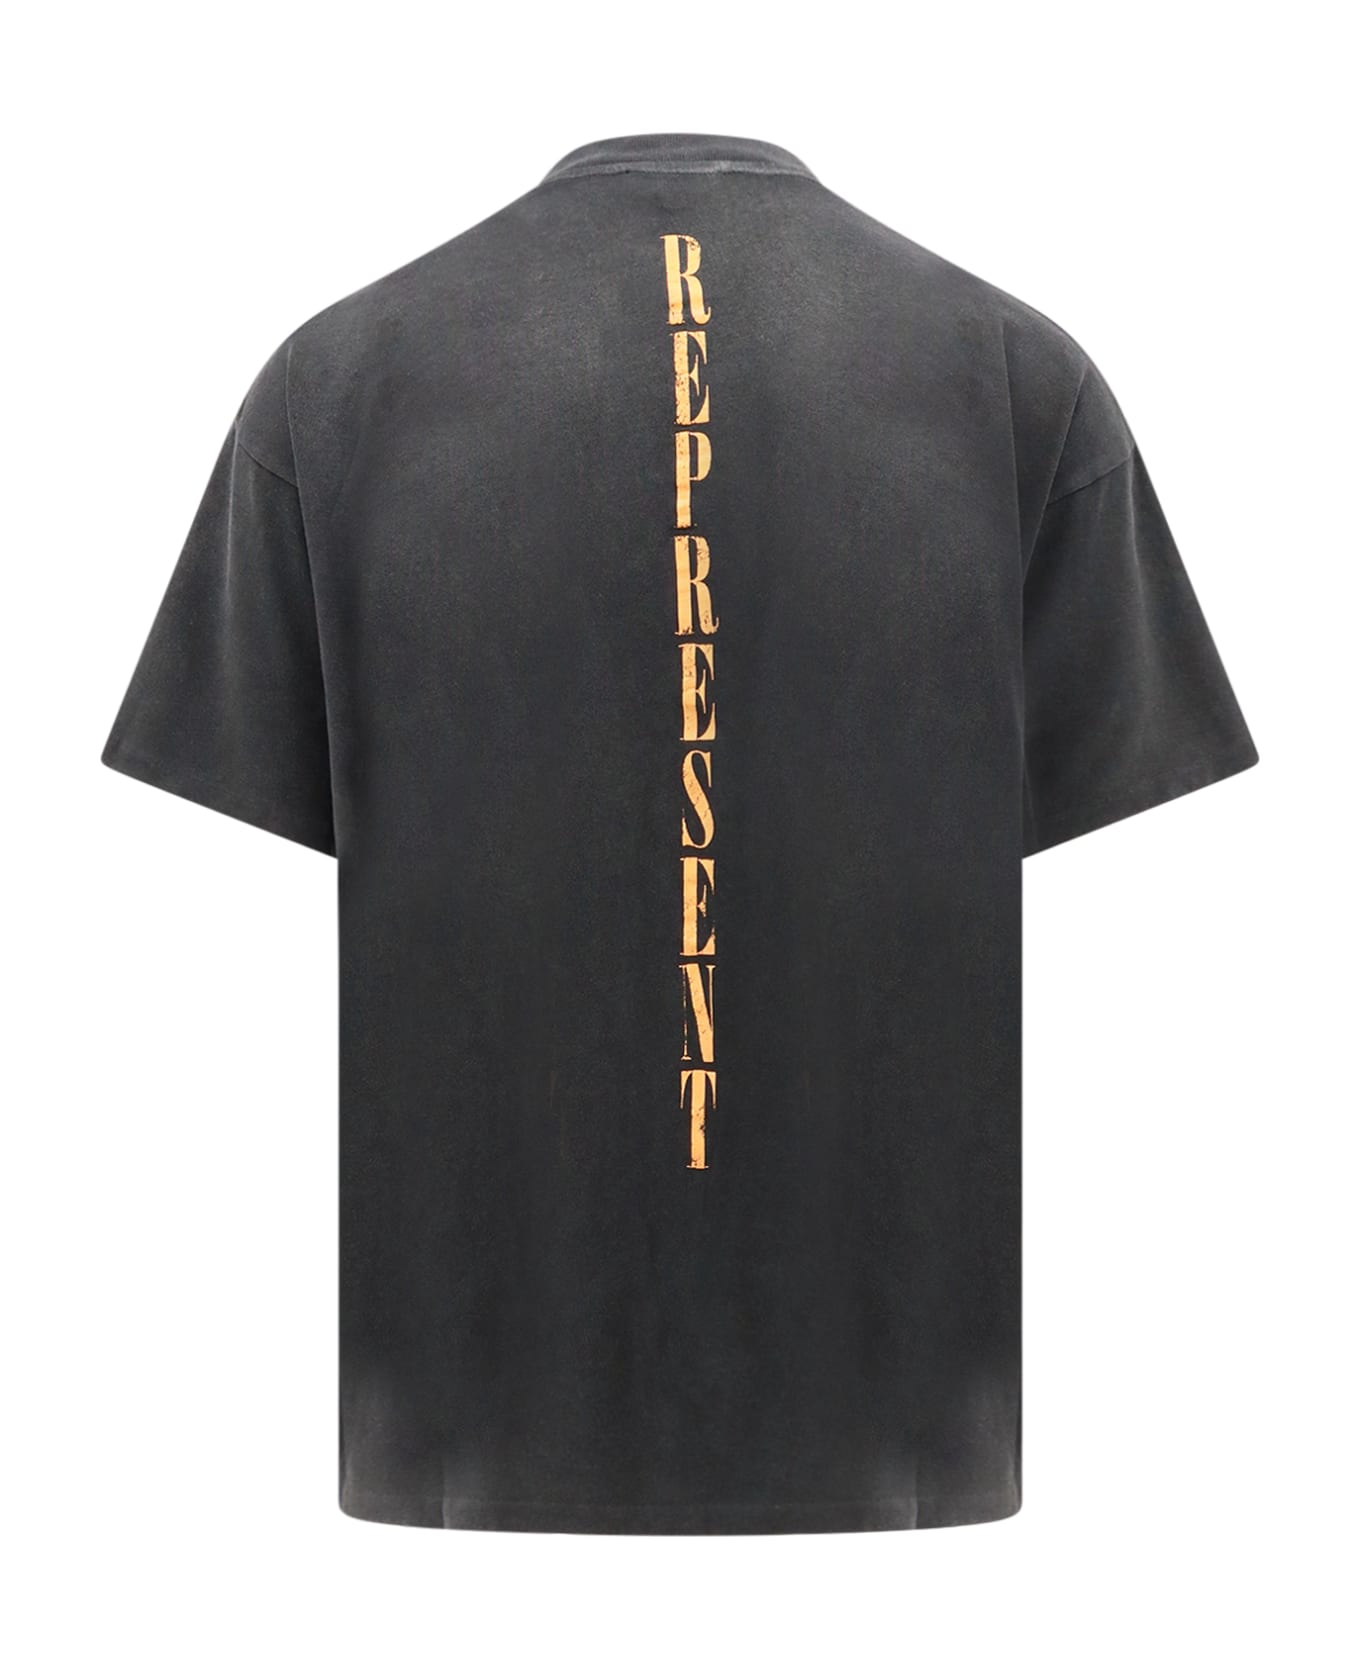 REPRESENT T-shirt - Aged black シャツ